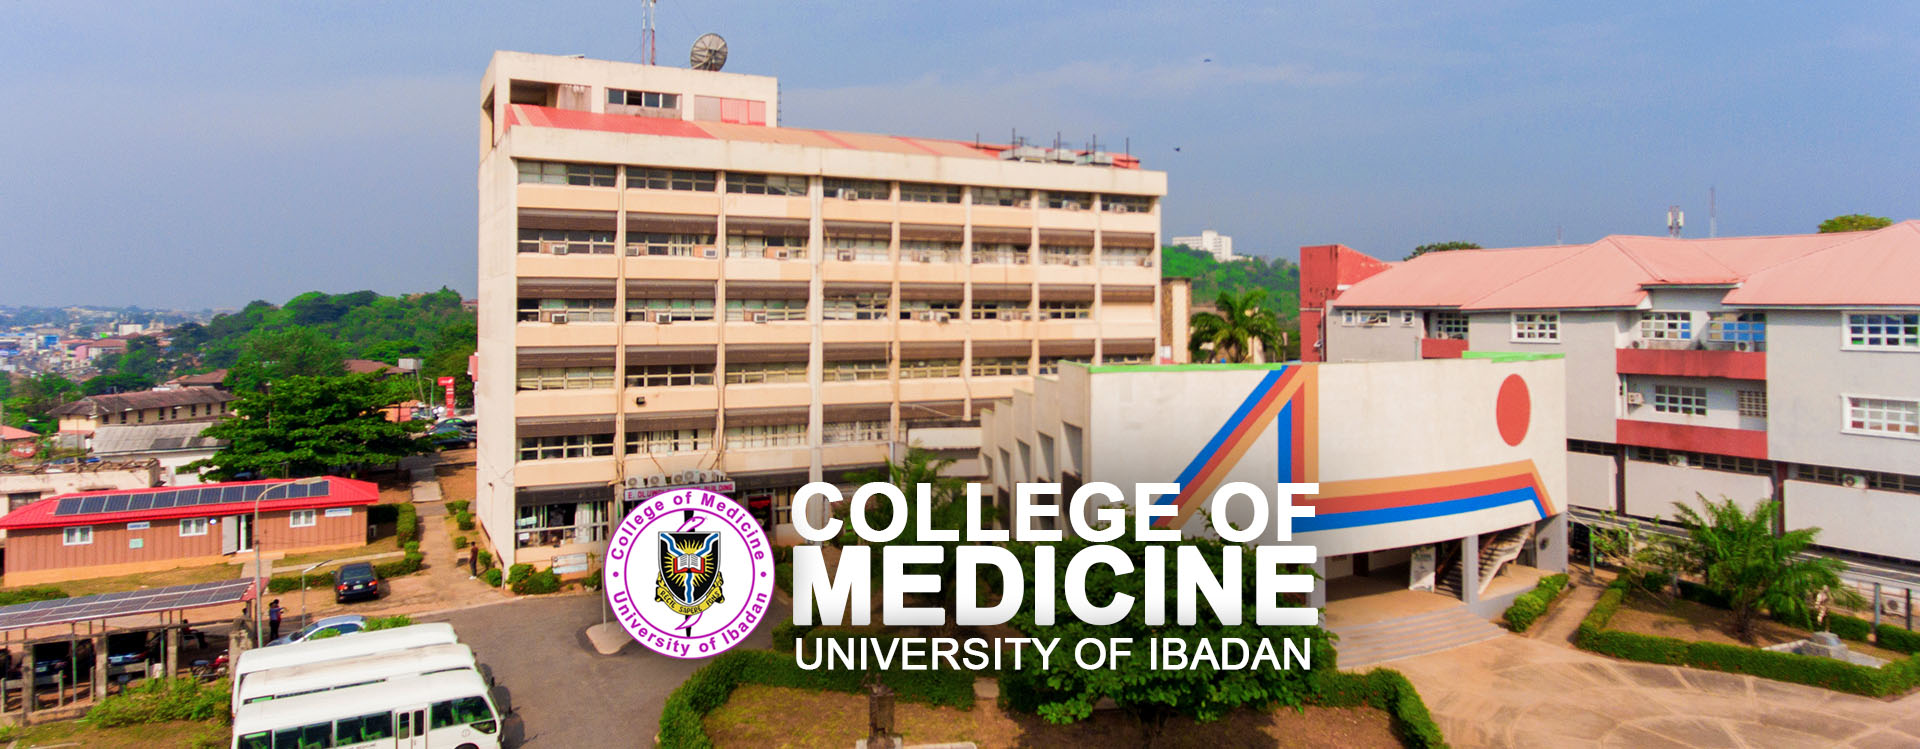 College of Medicine, University of Ibadan